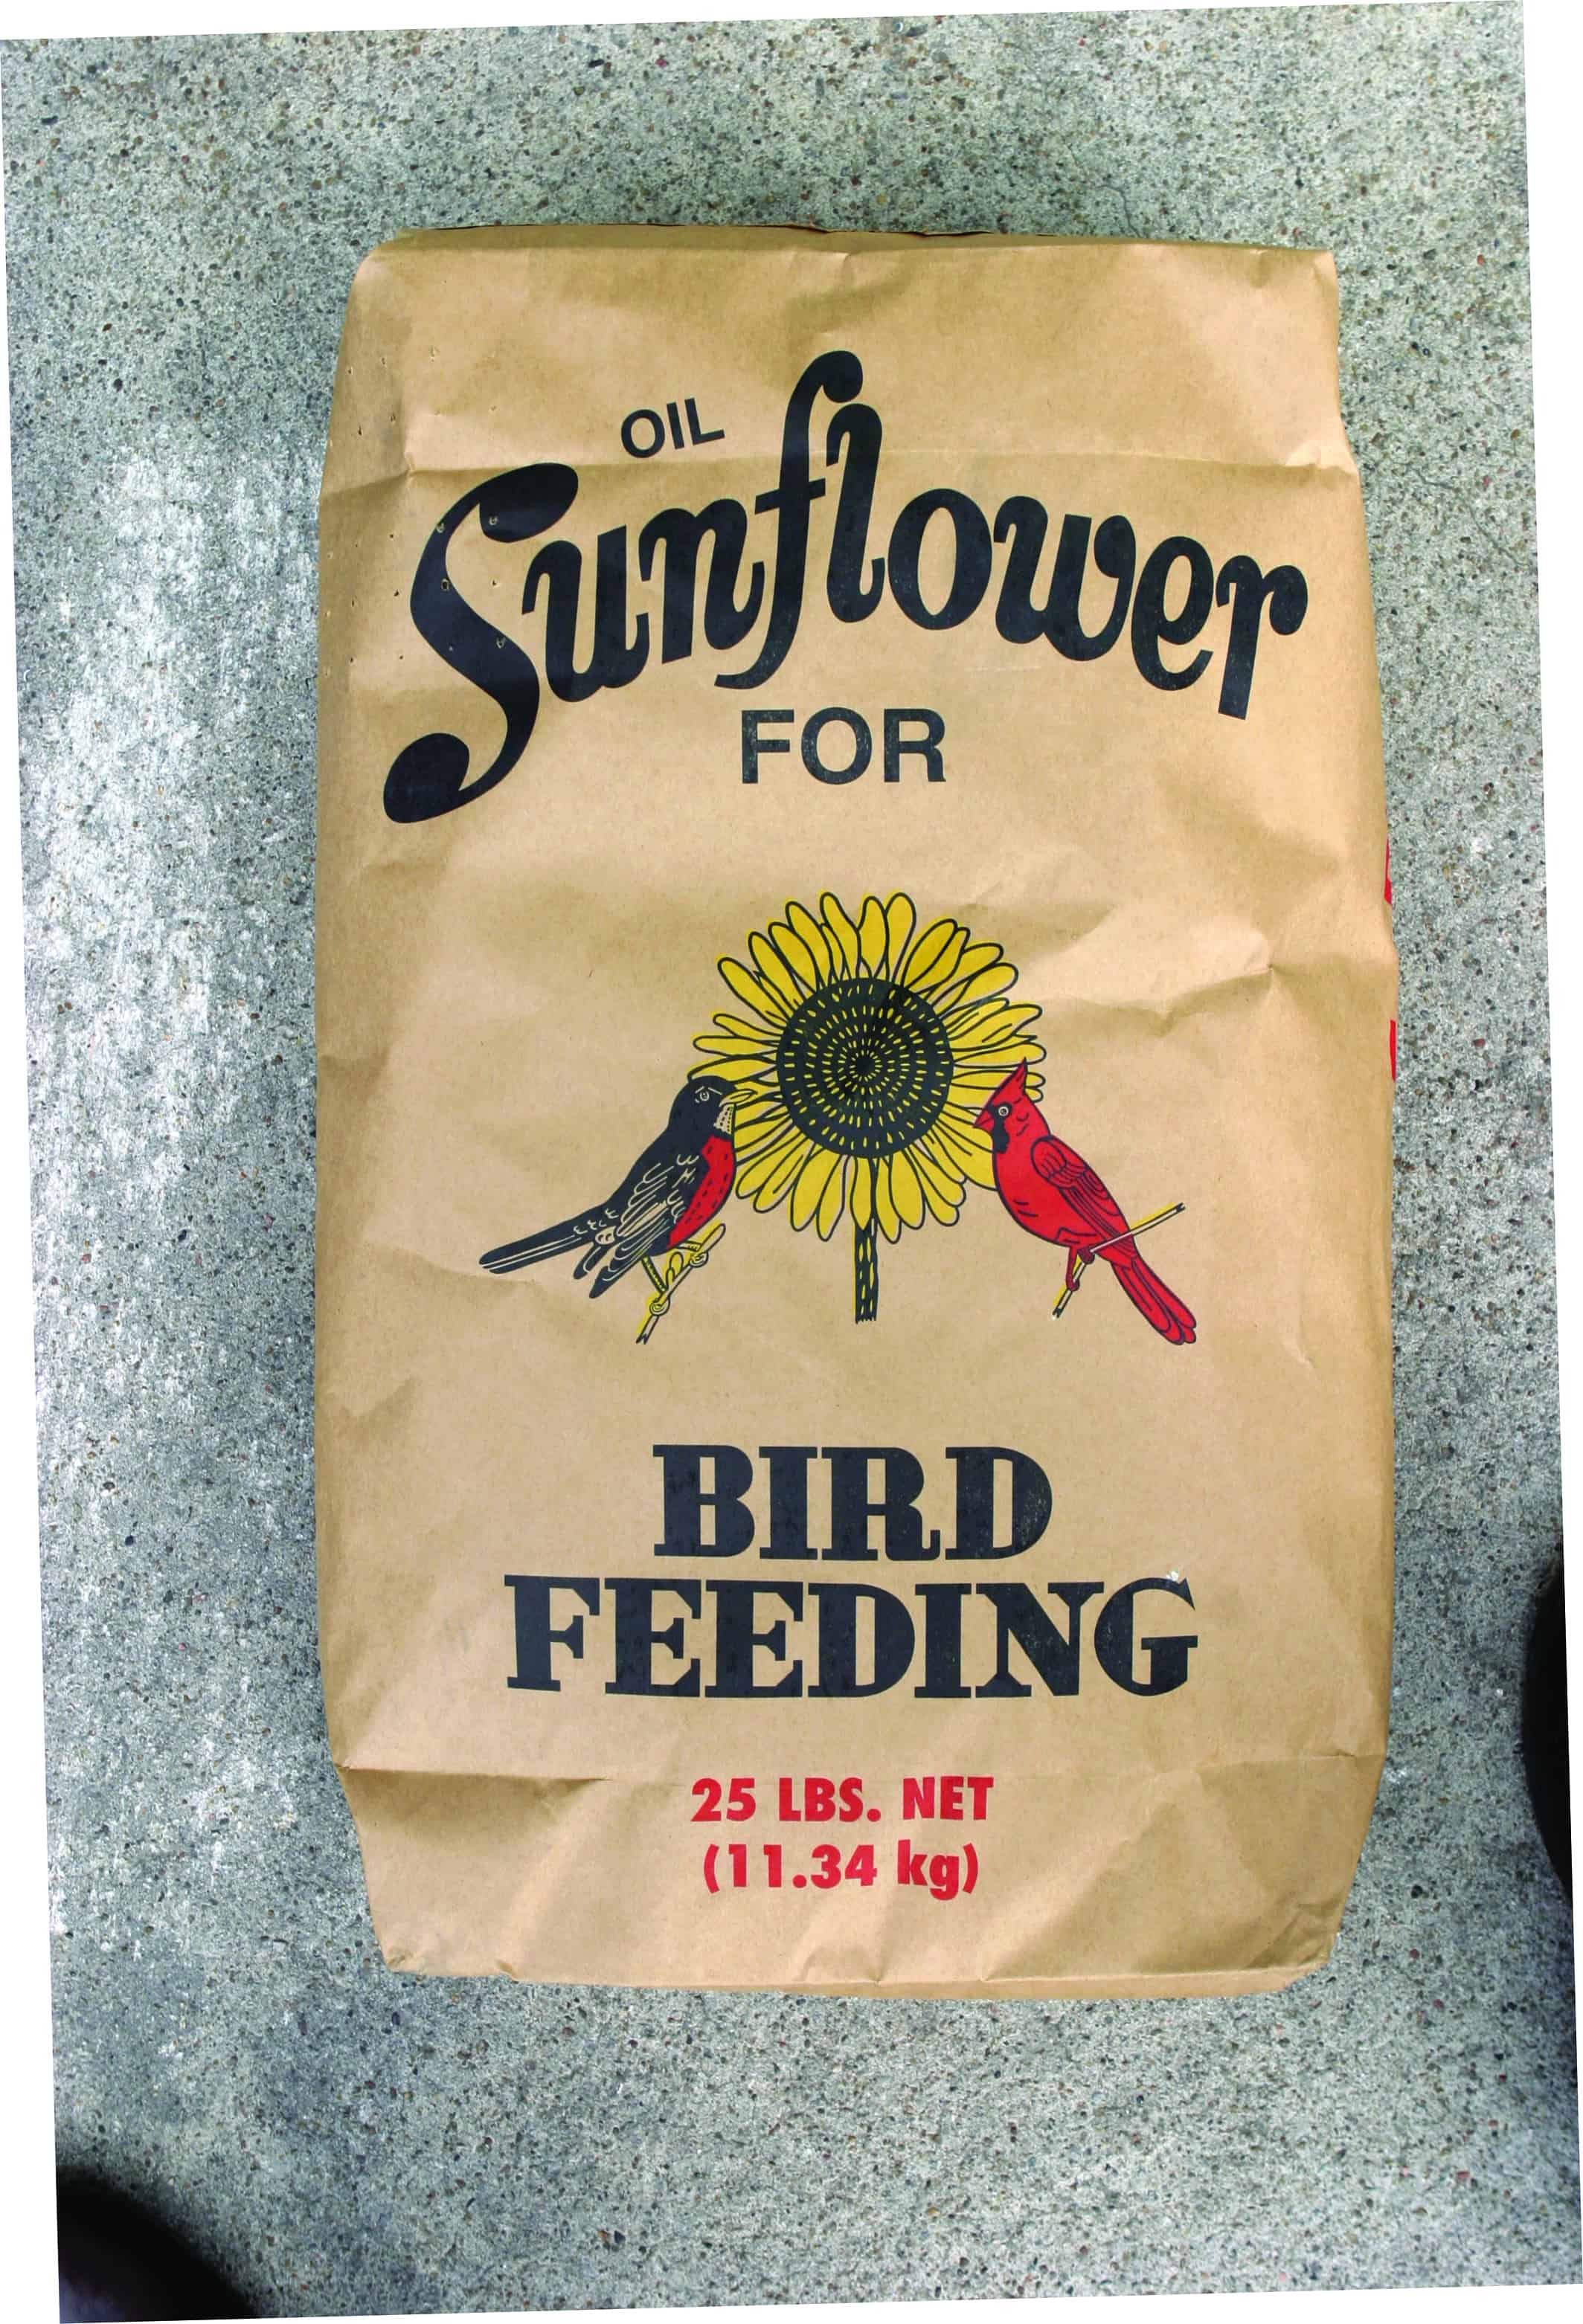 Bag of sunflower seeds